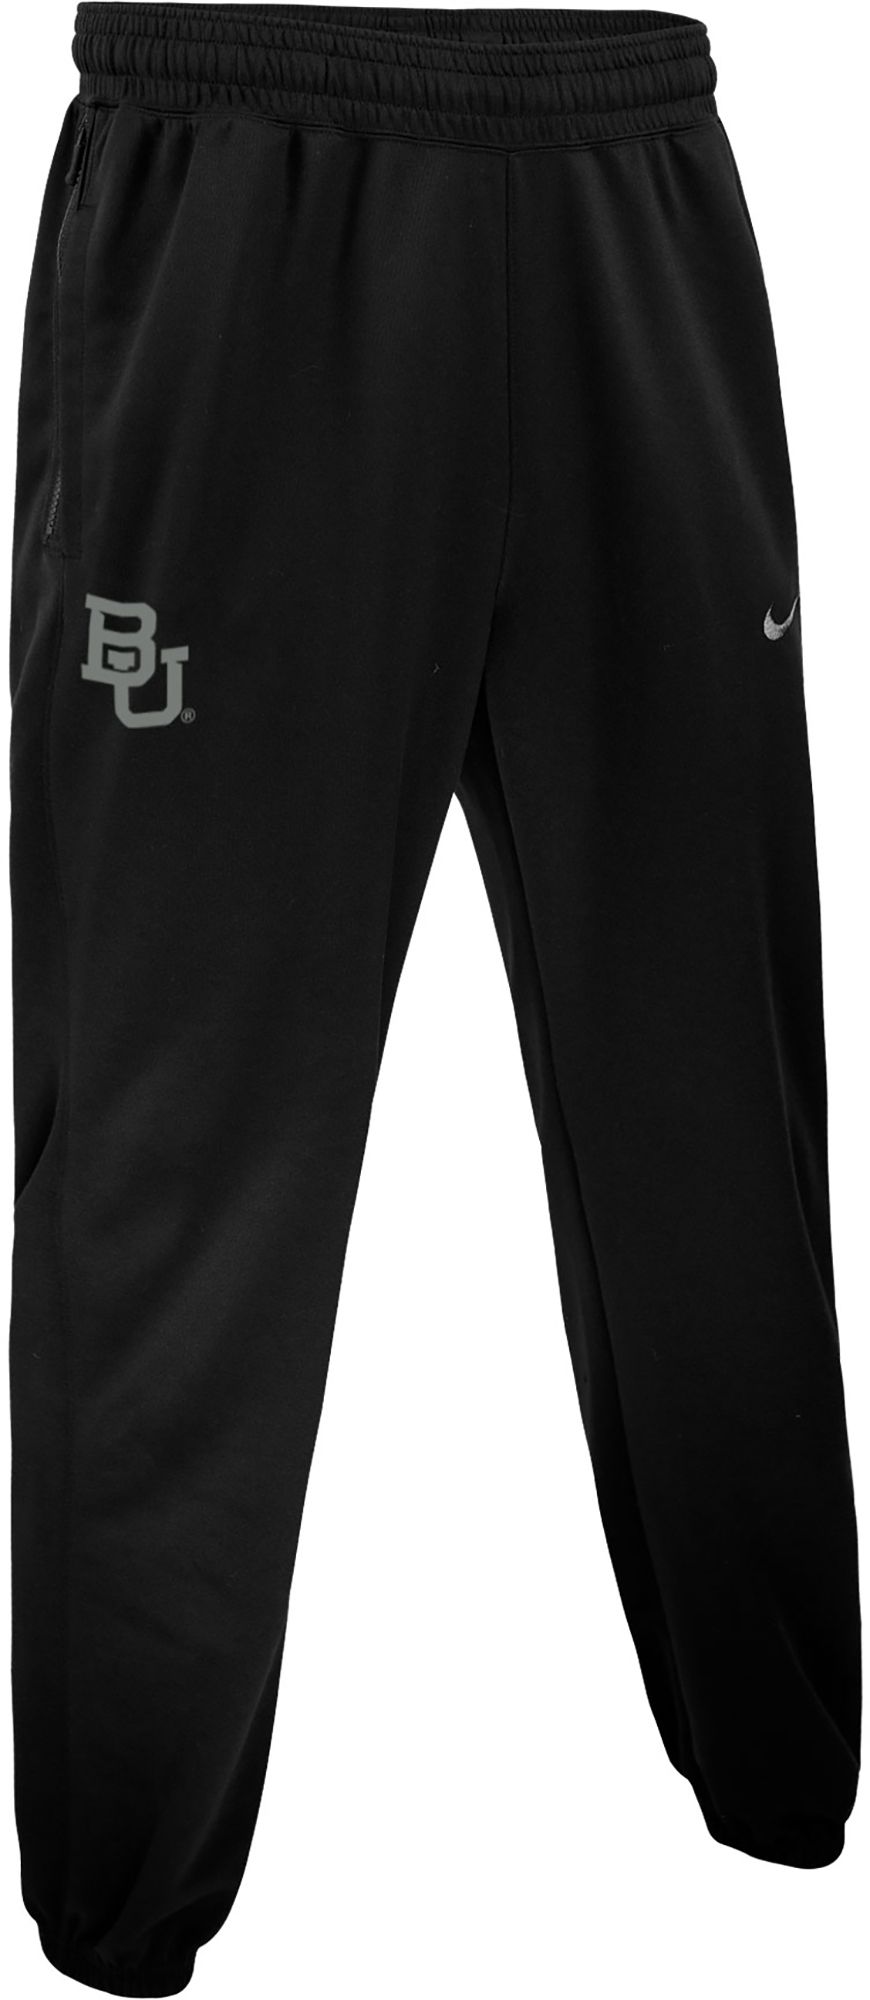 Nike Men's Baylor Bears Black Spotlight Basketball Fleece Pants